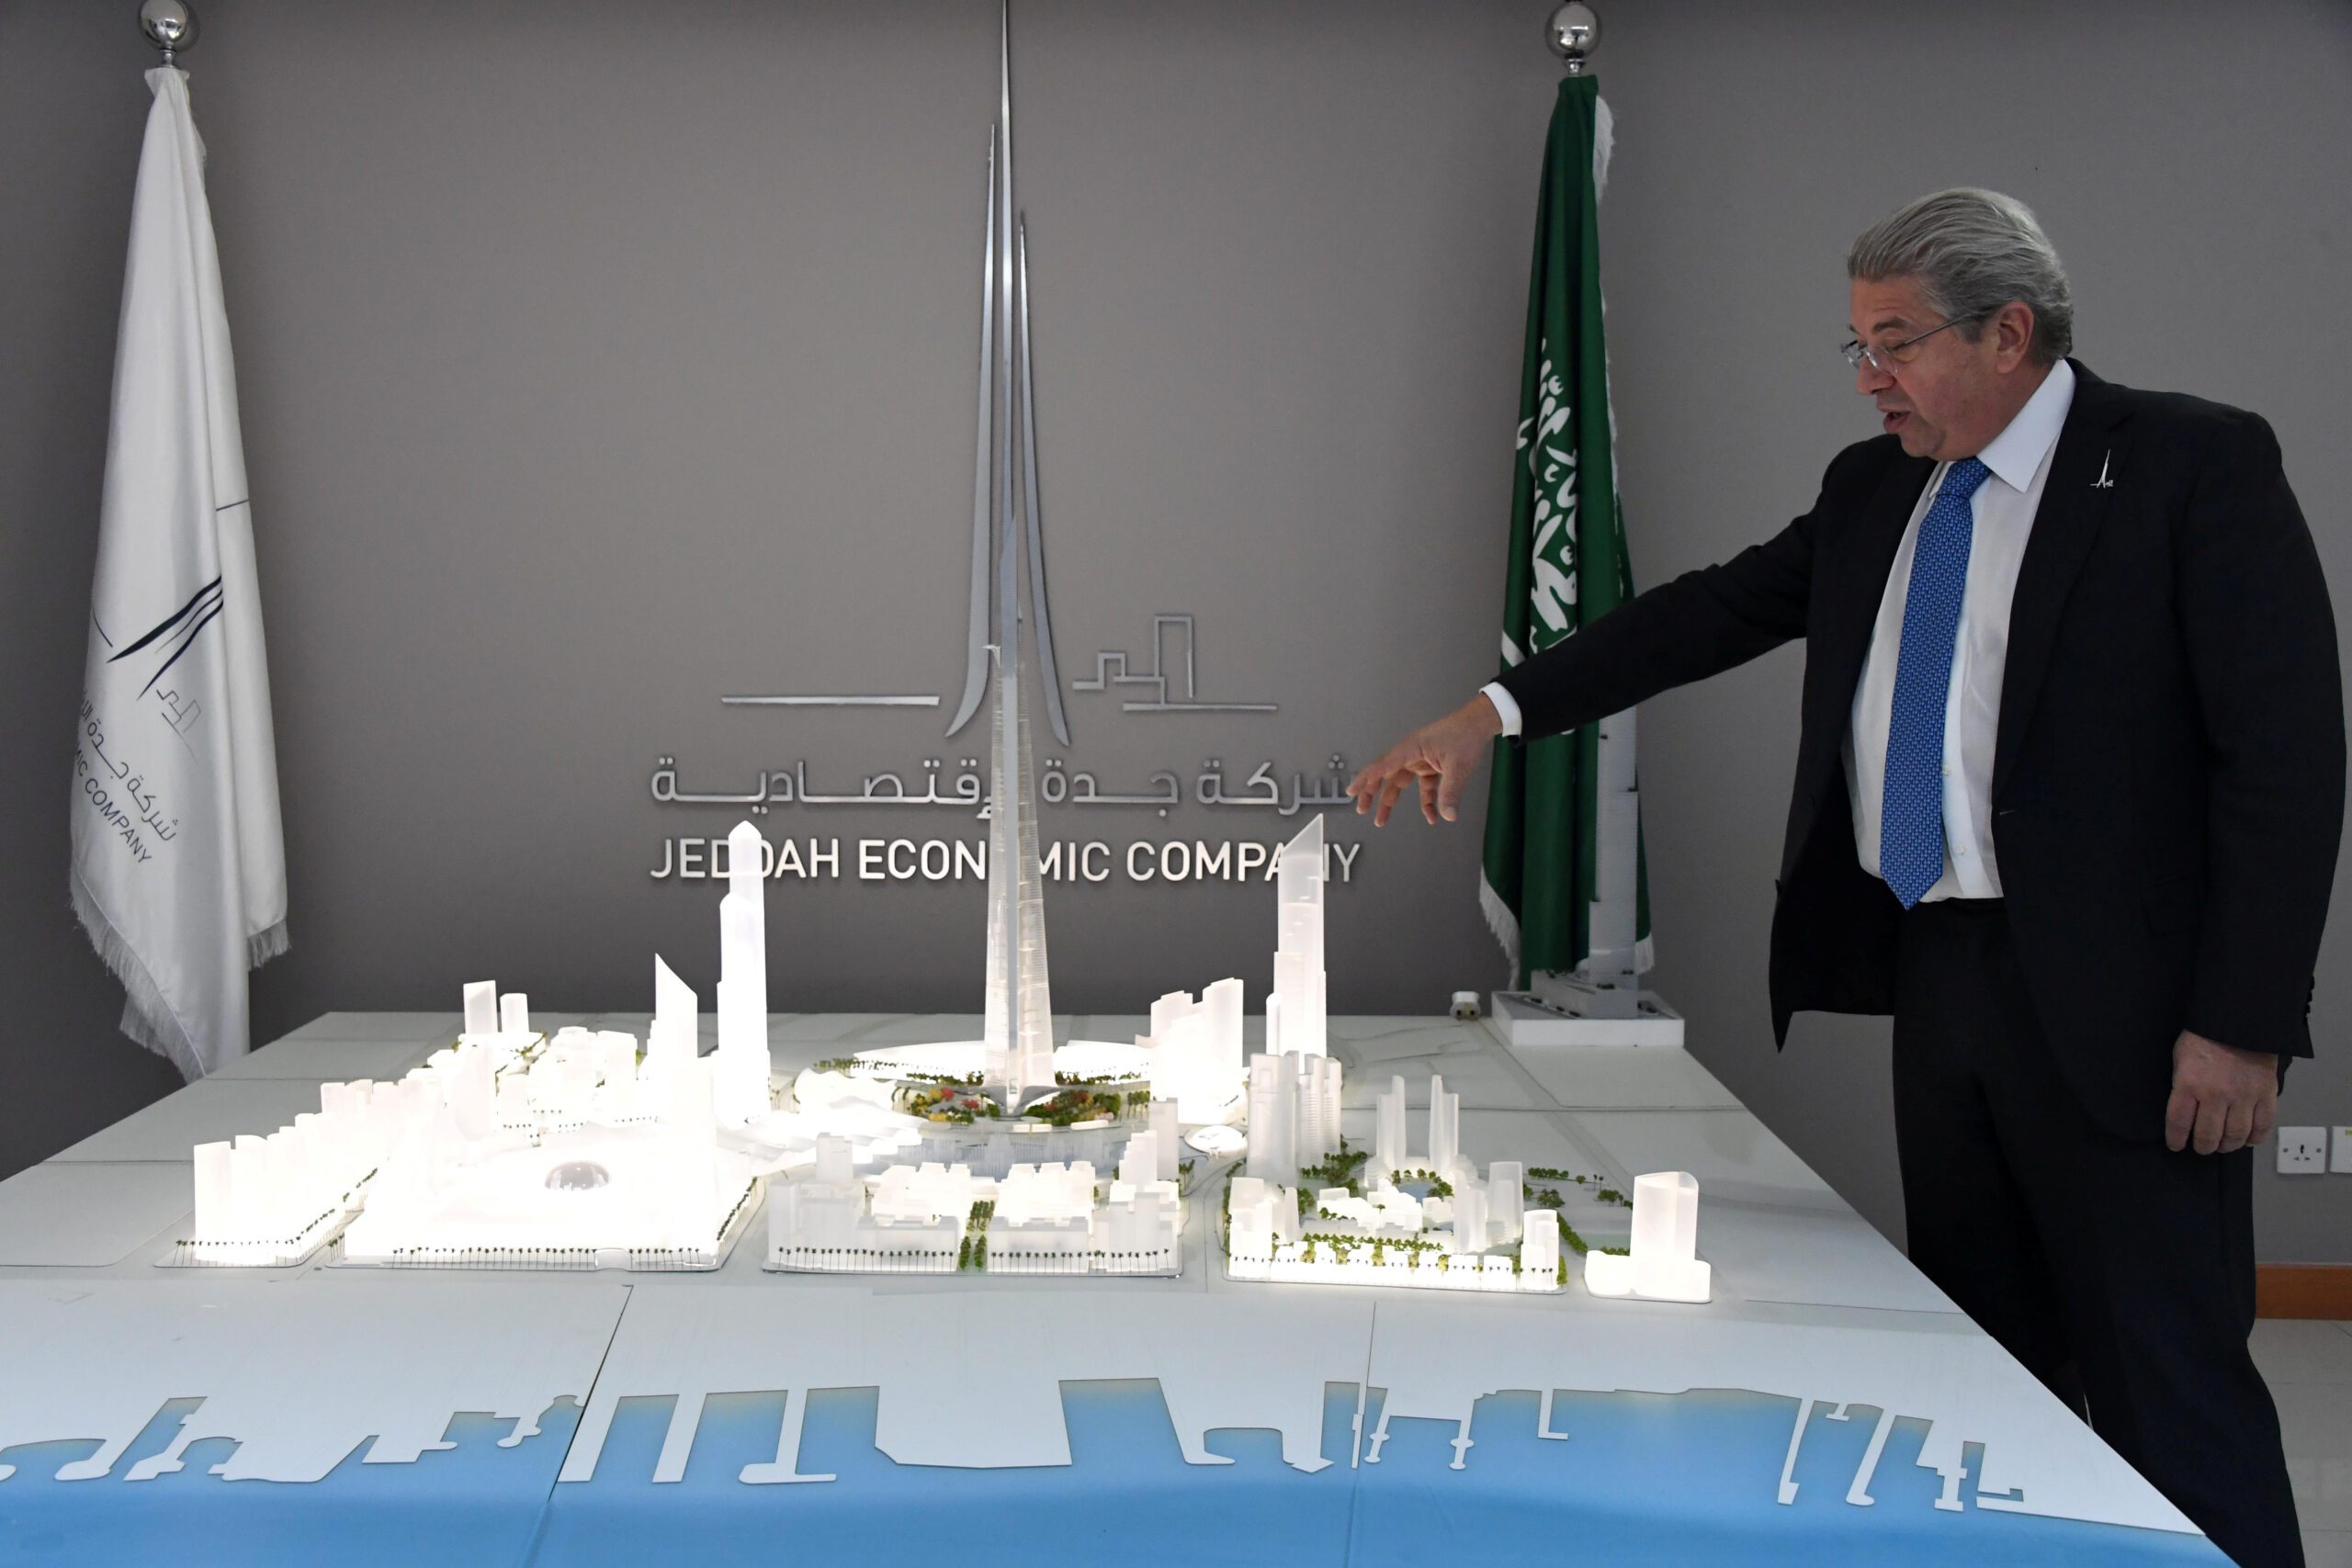 Jeddah Economic Company CEO Mounib Hammoud, shows a model of Jeddah Tower.